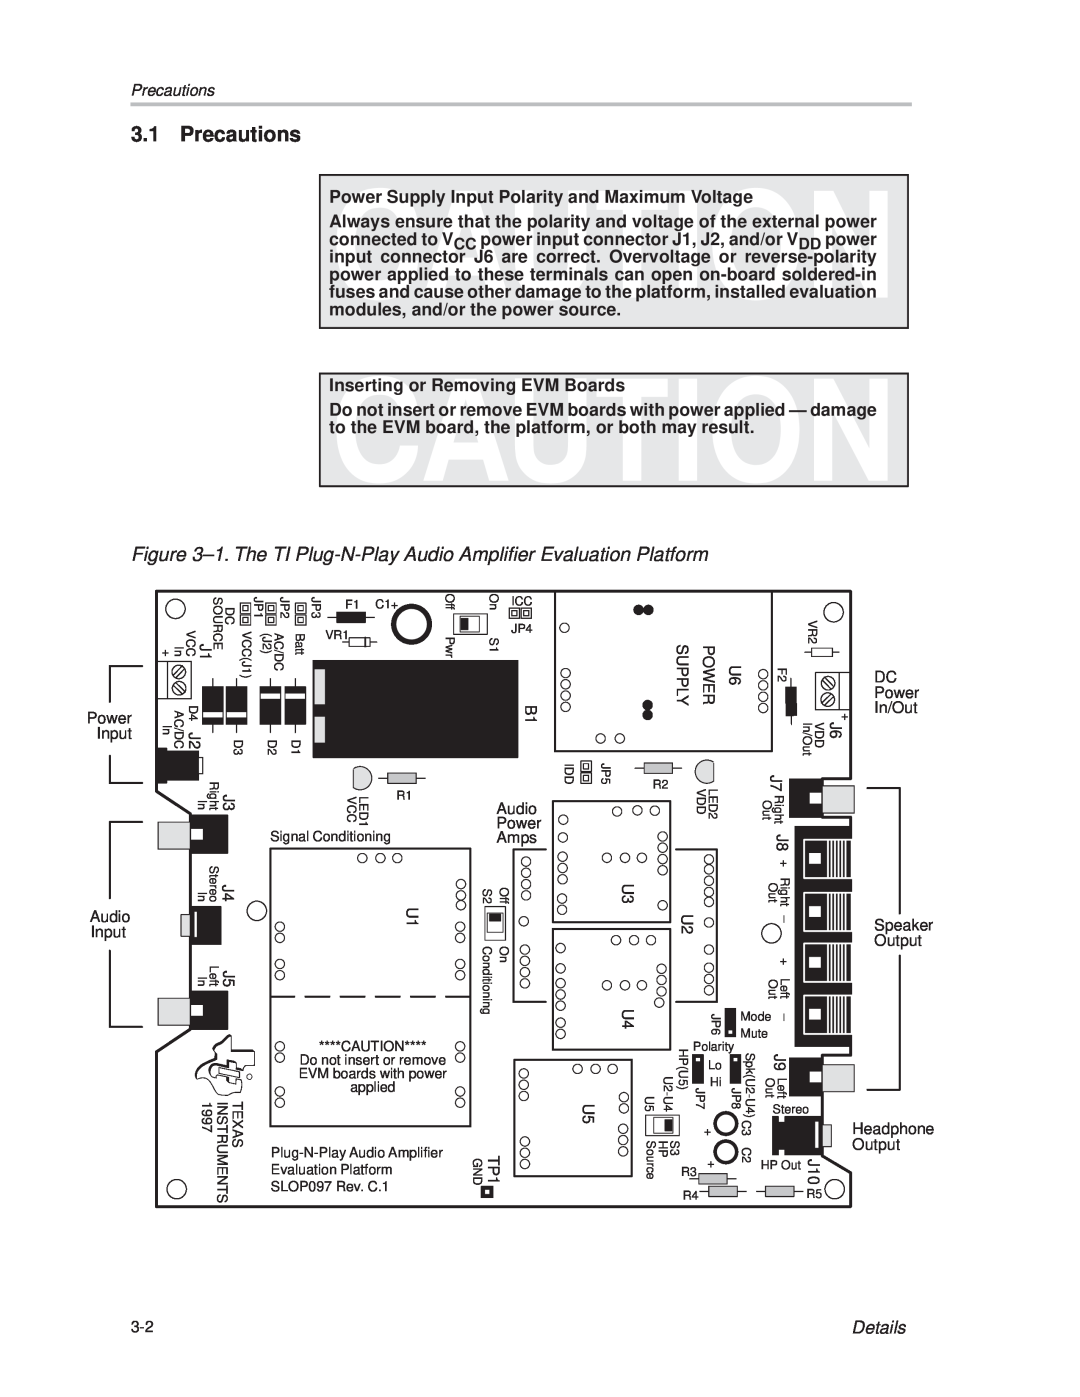 Texas Instruments TPA 311 manual Precautions, ±1. The TI Plug-N-Play Audio Amplifier Evaluation Platform, Details 